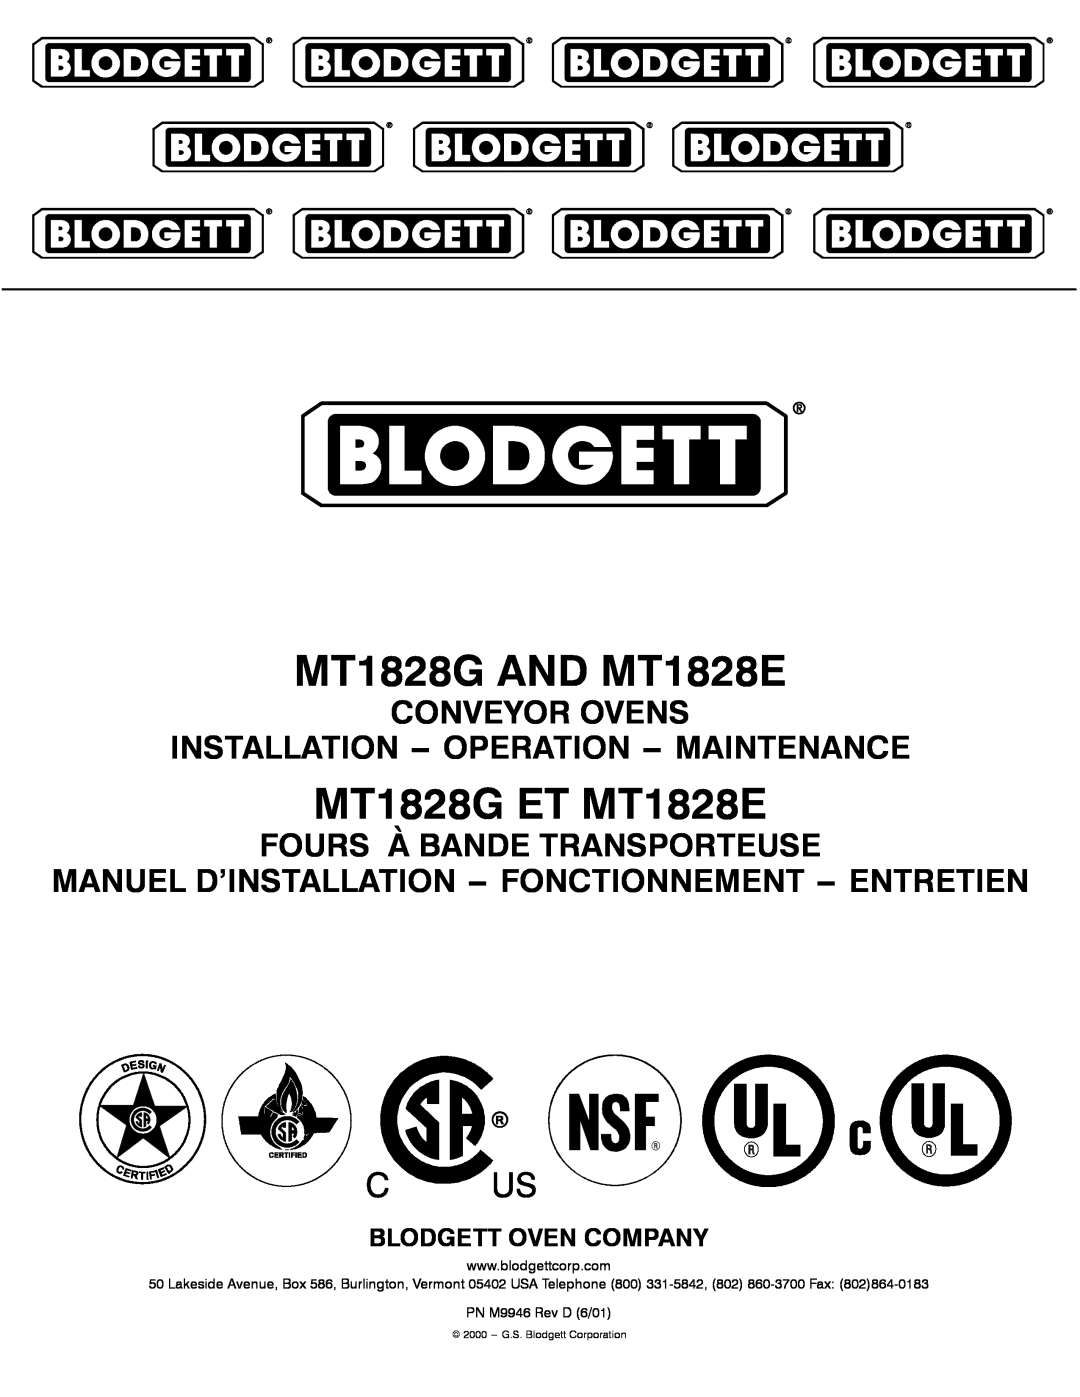 Blodgett manual MT1828G AND MT1828E, MT1828G ET MT1828E, Conveyor Ovens Installation -- Operation -- Maintenance 